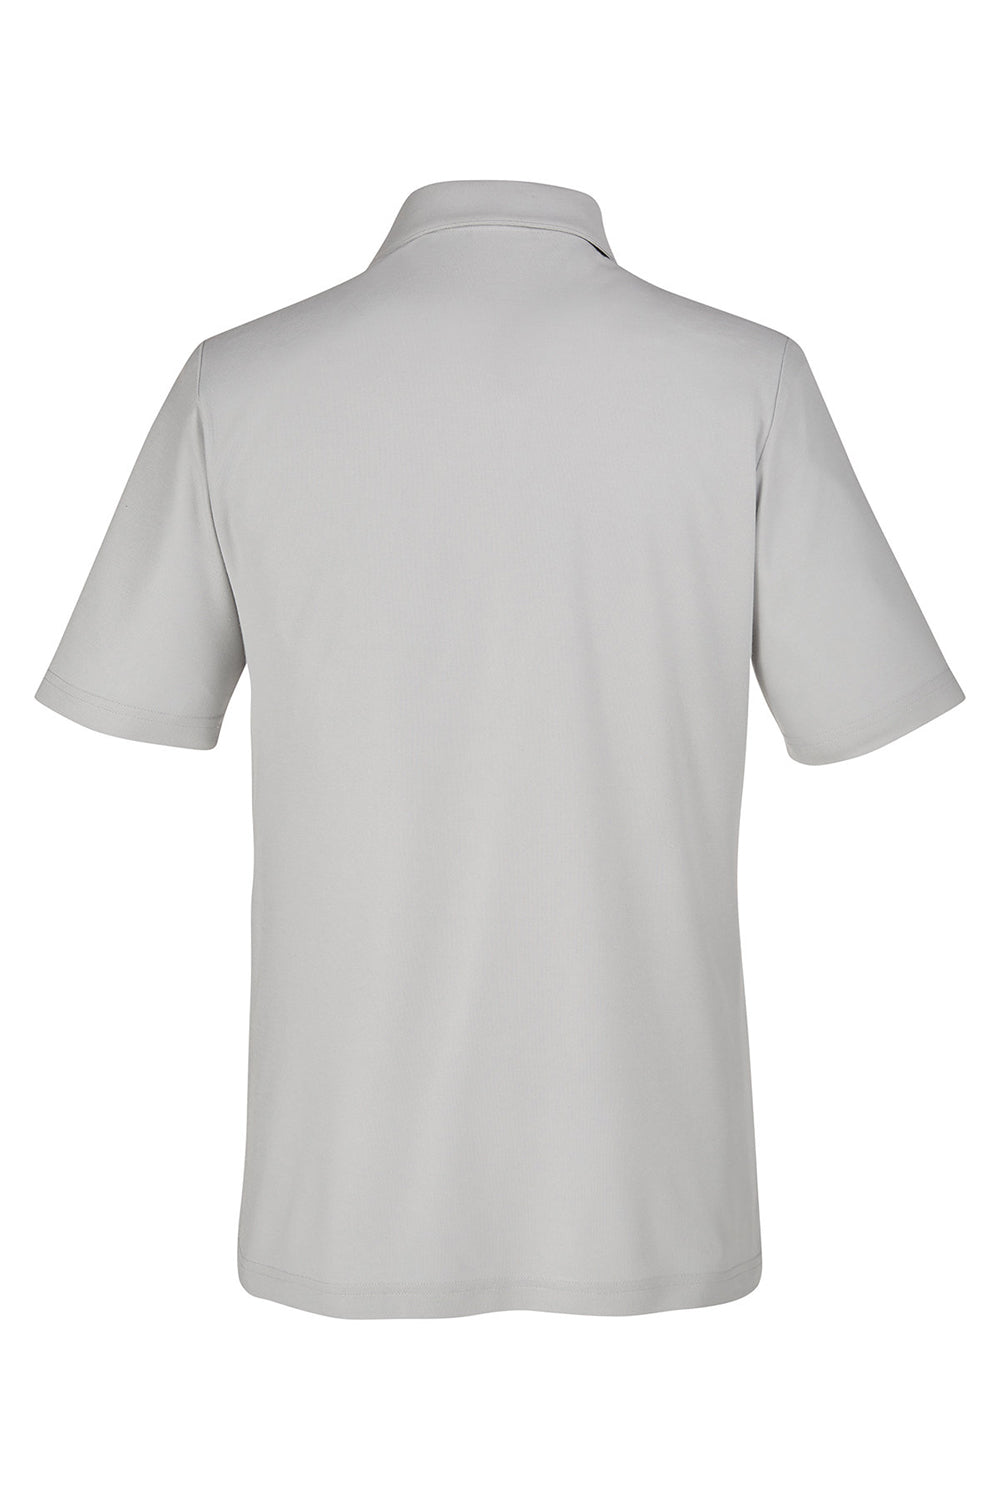 Core 365 CE112 Mens Fusion ChromaSoft Performance Moisture Wicking Short Sleeve Polo Shirt Platinum Grey Flat Back